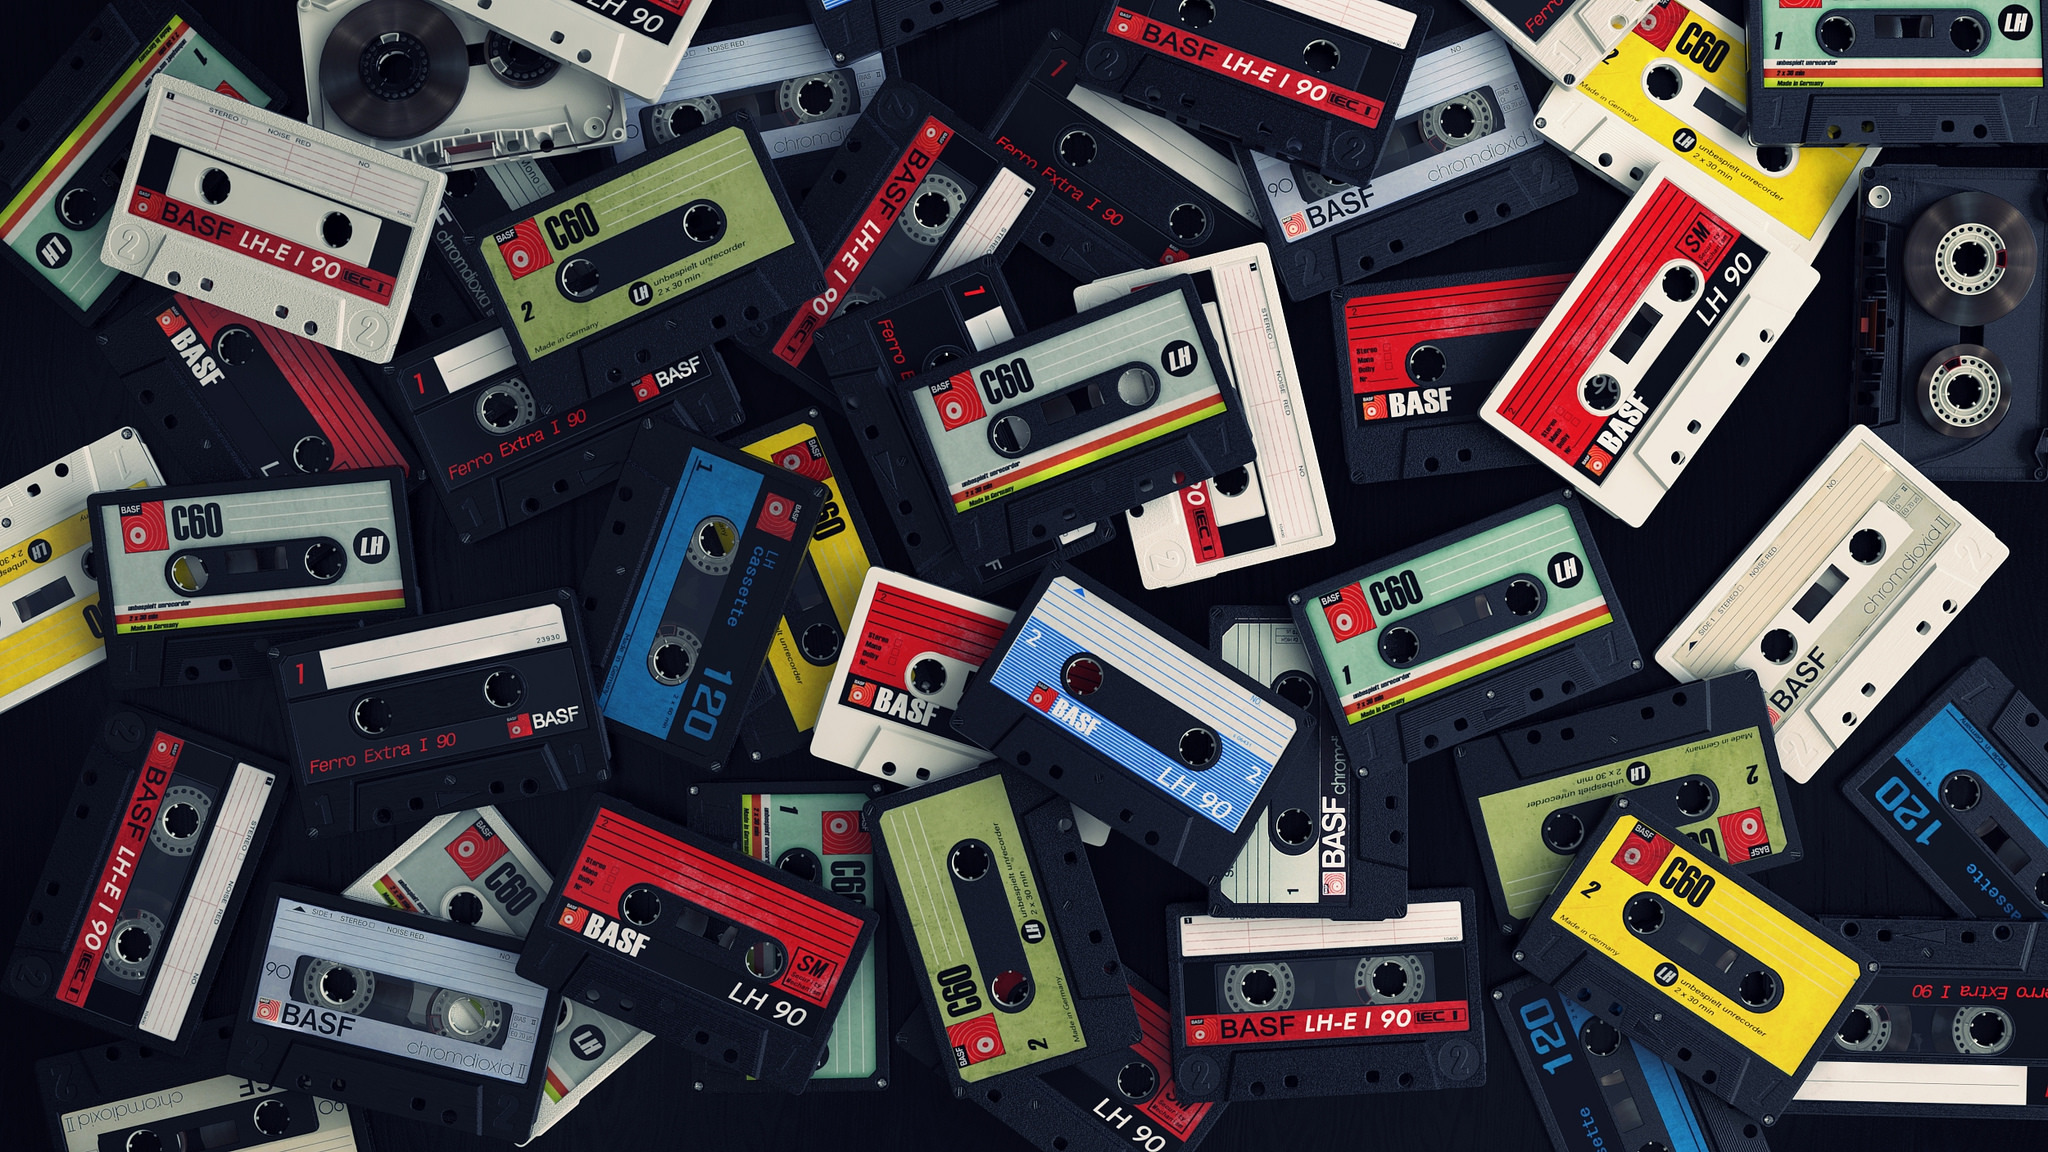 90s collection. Аудиокассета TDK 80e. Компакт кассета 80х. 90е кассеты картриджи. Старая кассета.